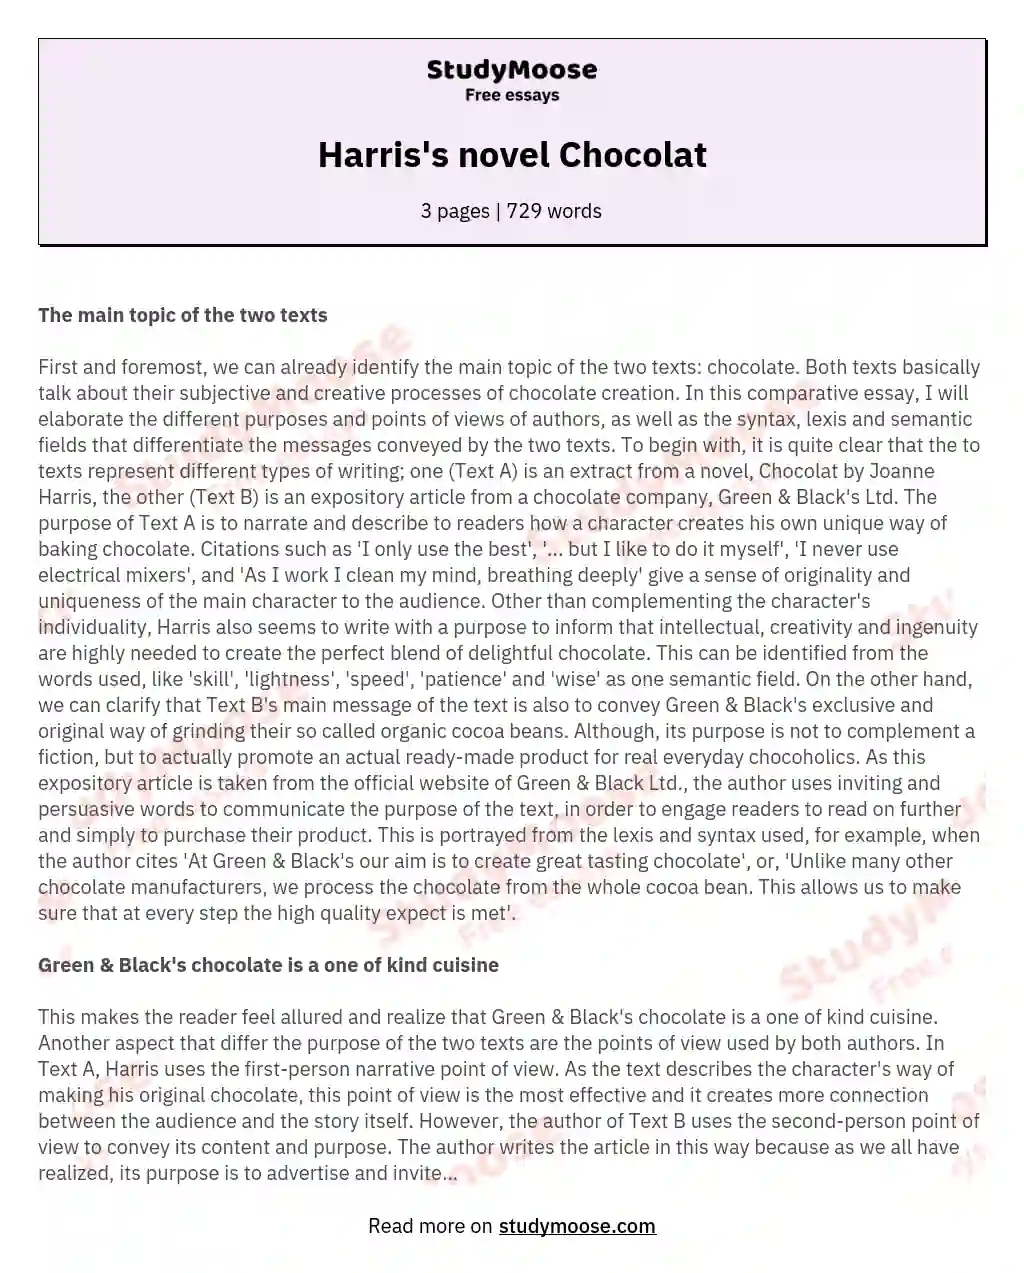 Harris's novel Chocolat essay